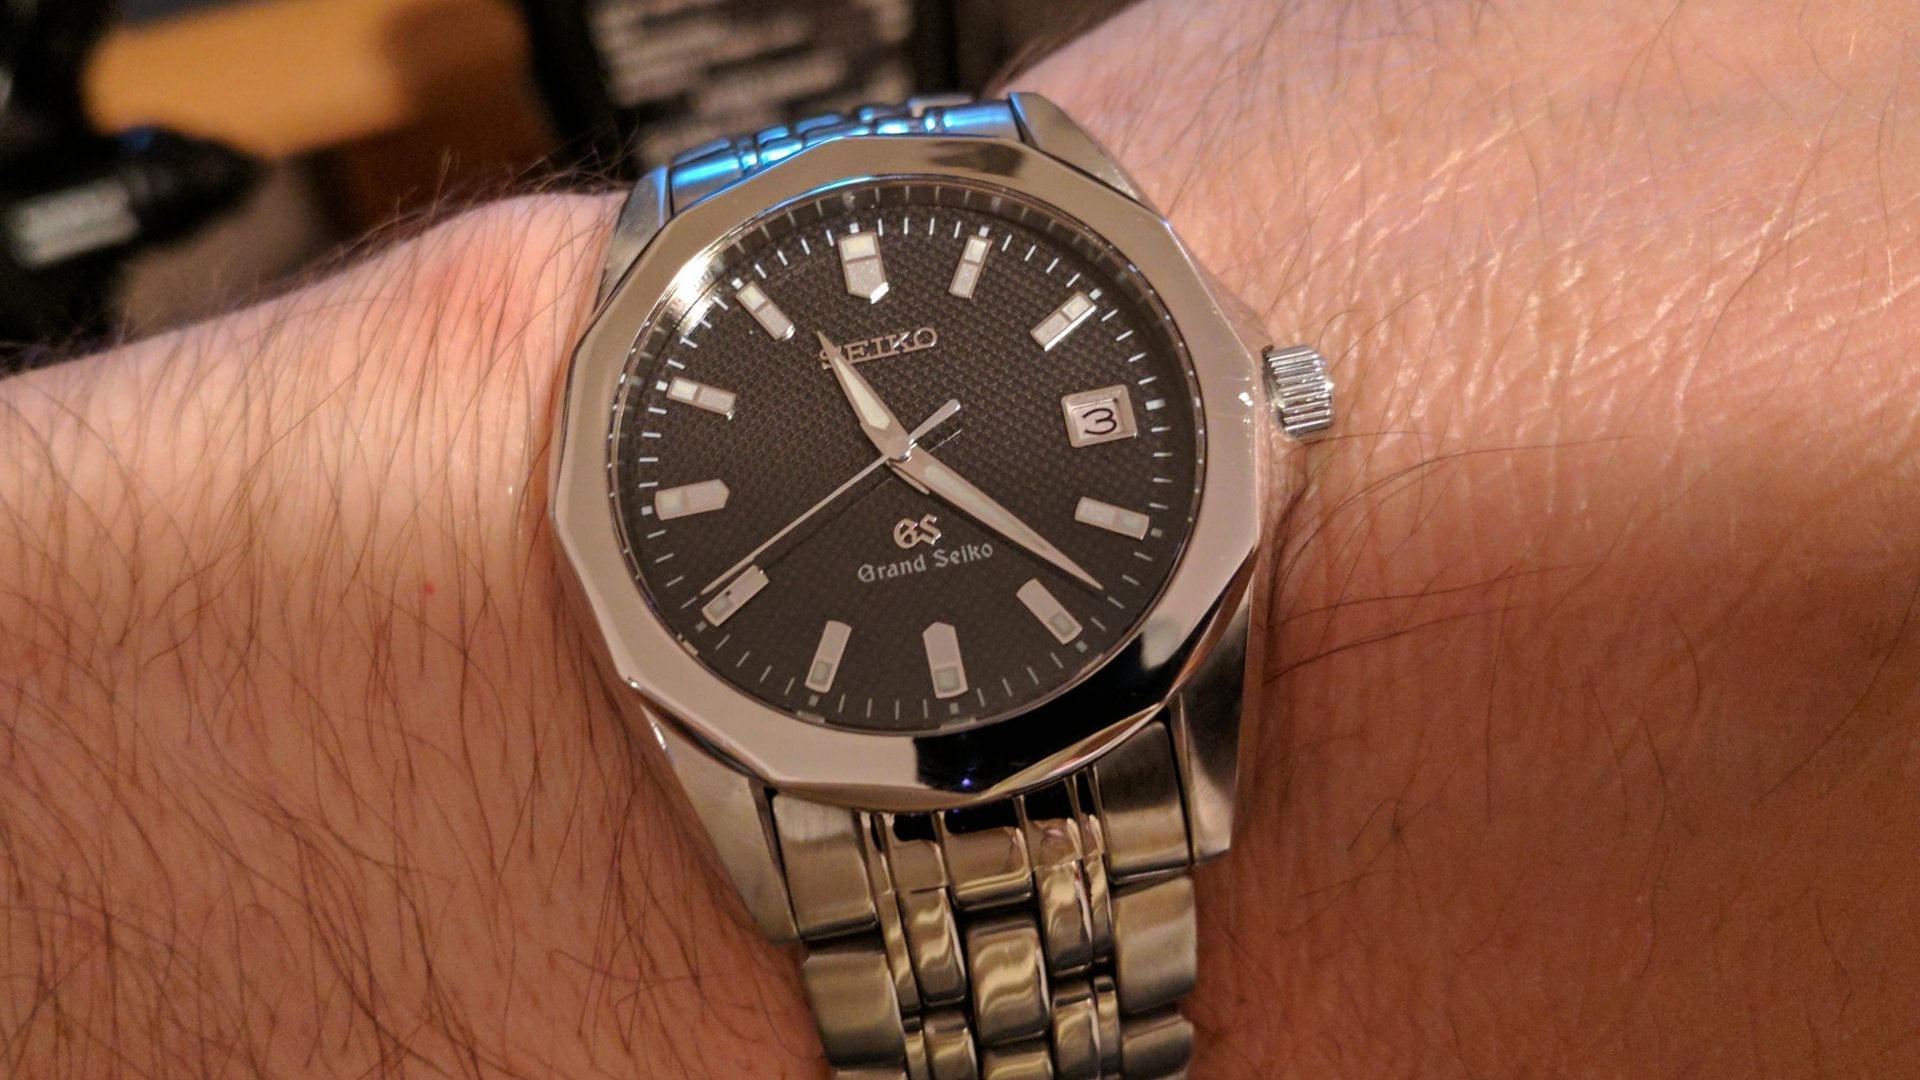 Any info on the Grand Seiko 8J56-8000 Quartz watch? | The Watch Site